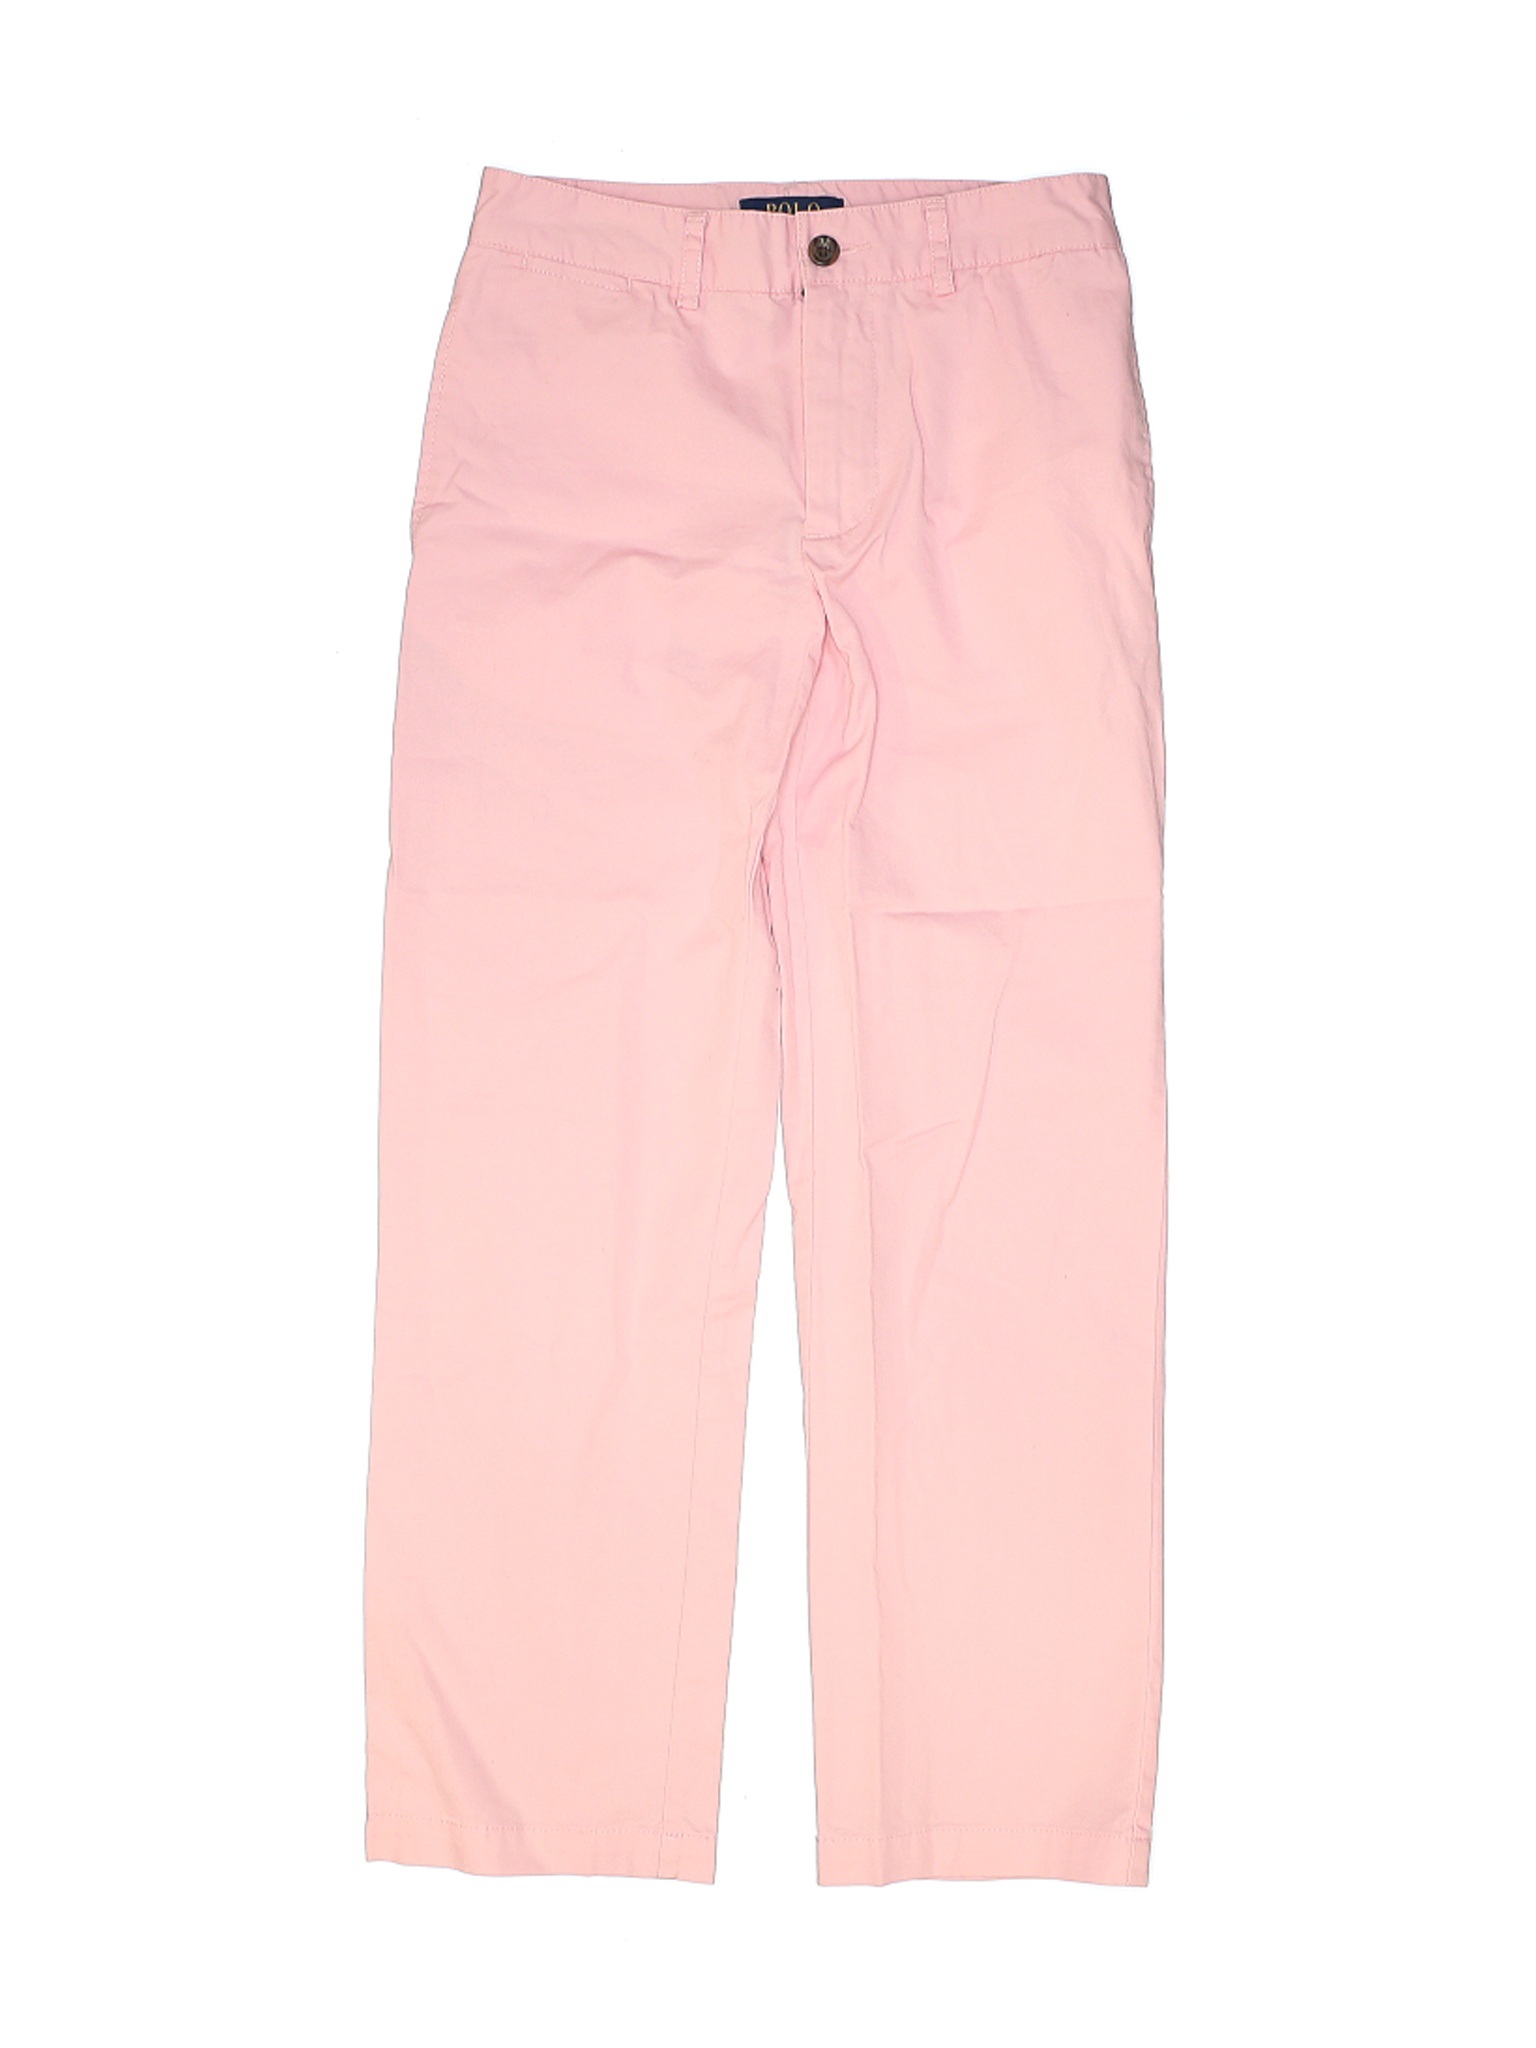 Polo by Ralph Lauren Girls Pink Khakis 10 | eBay